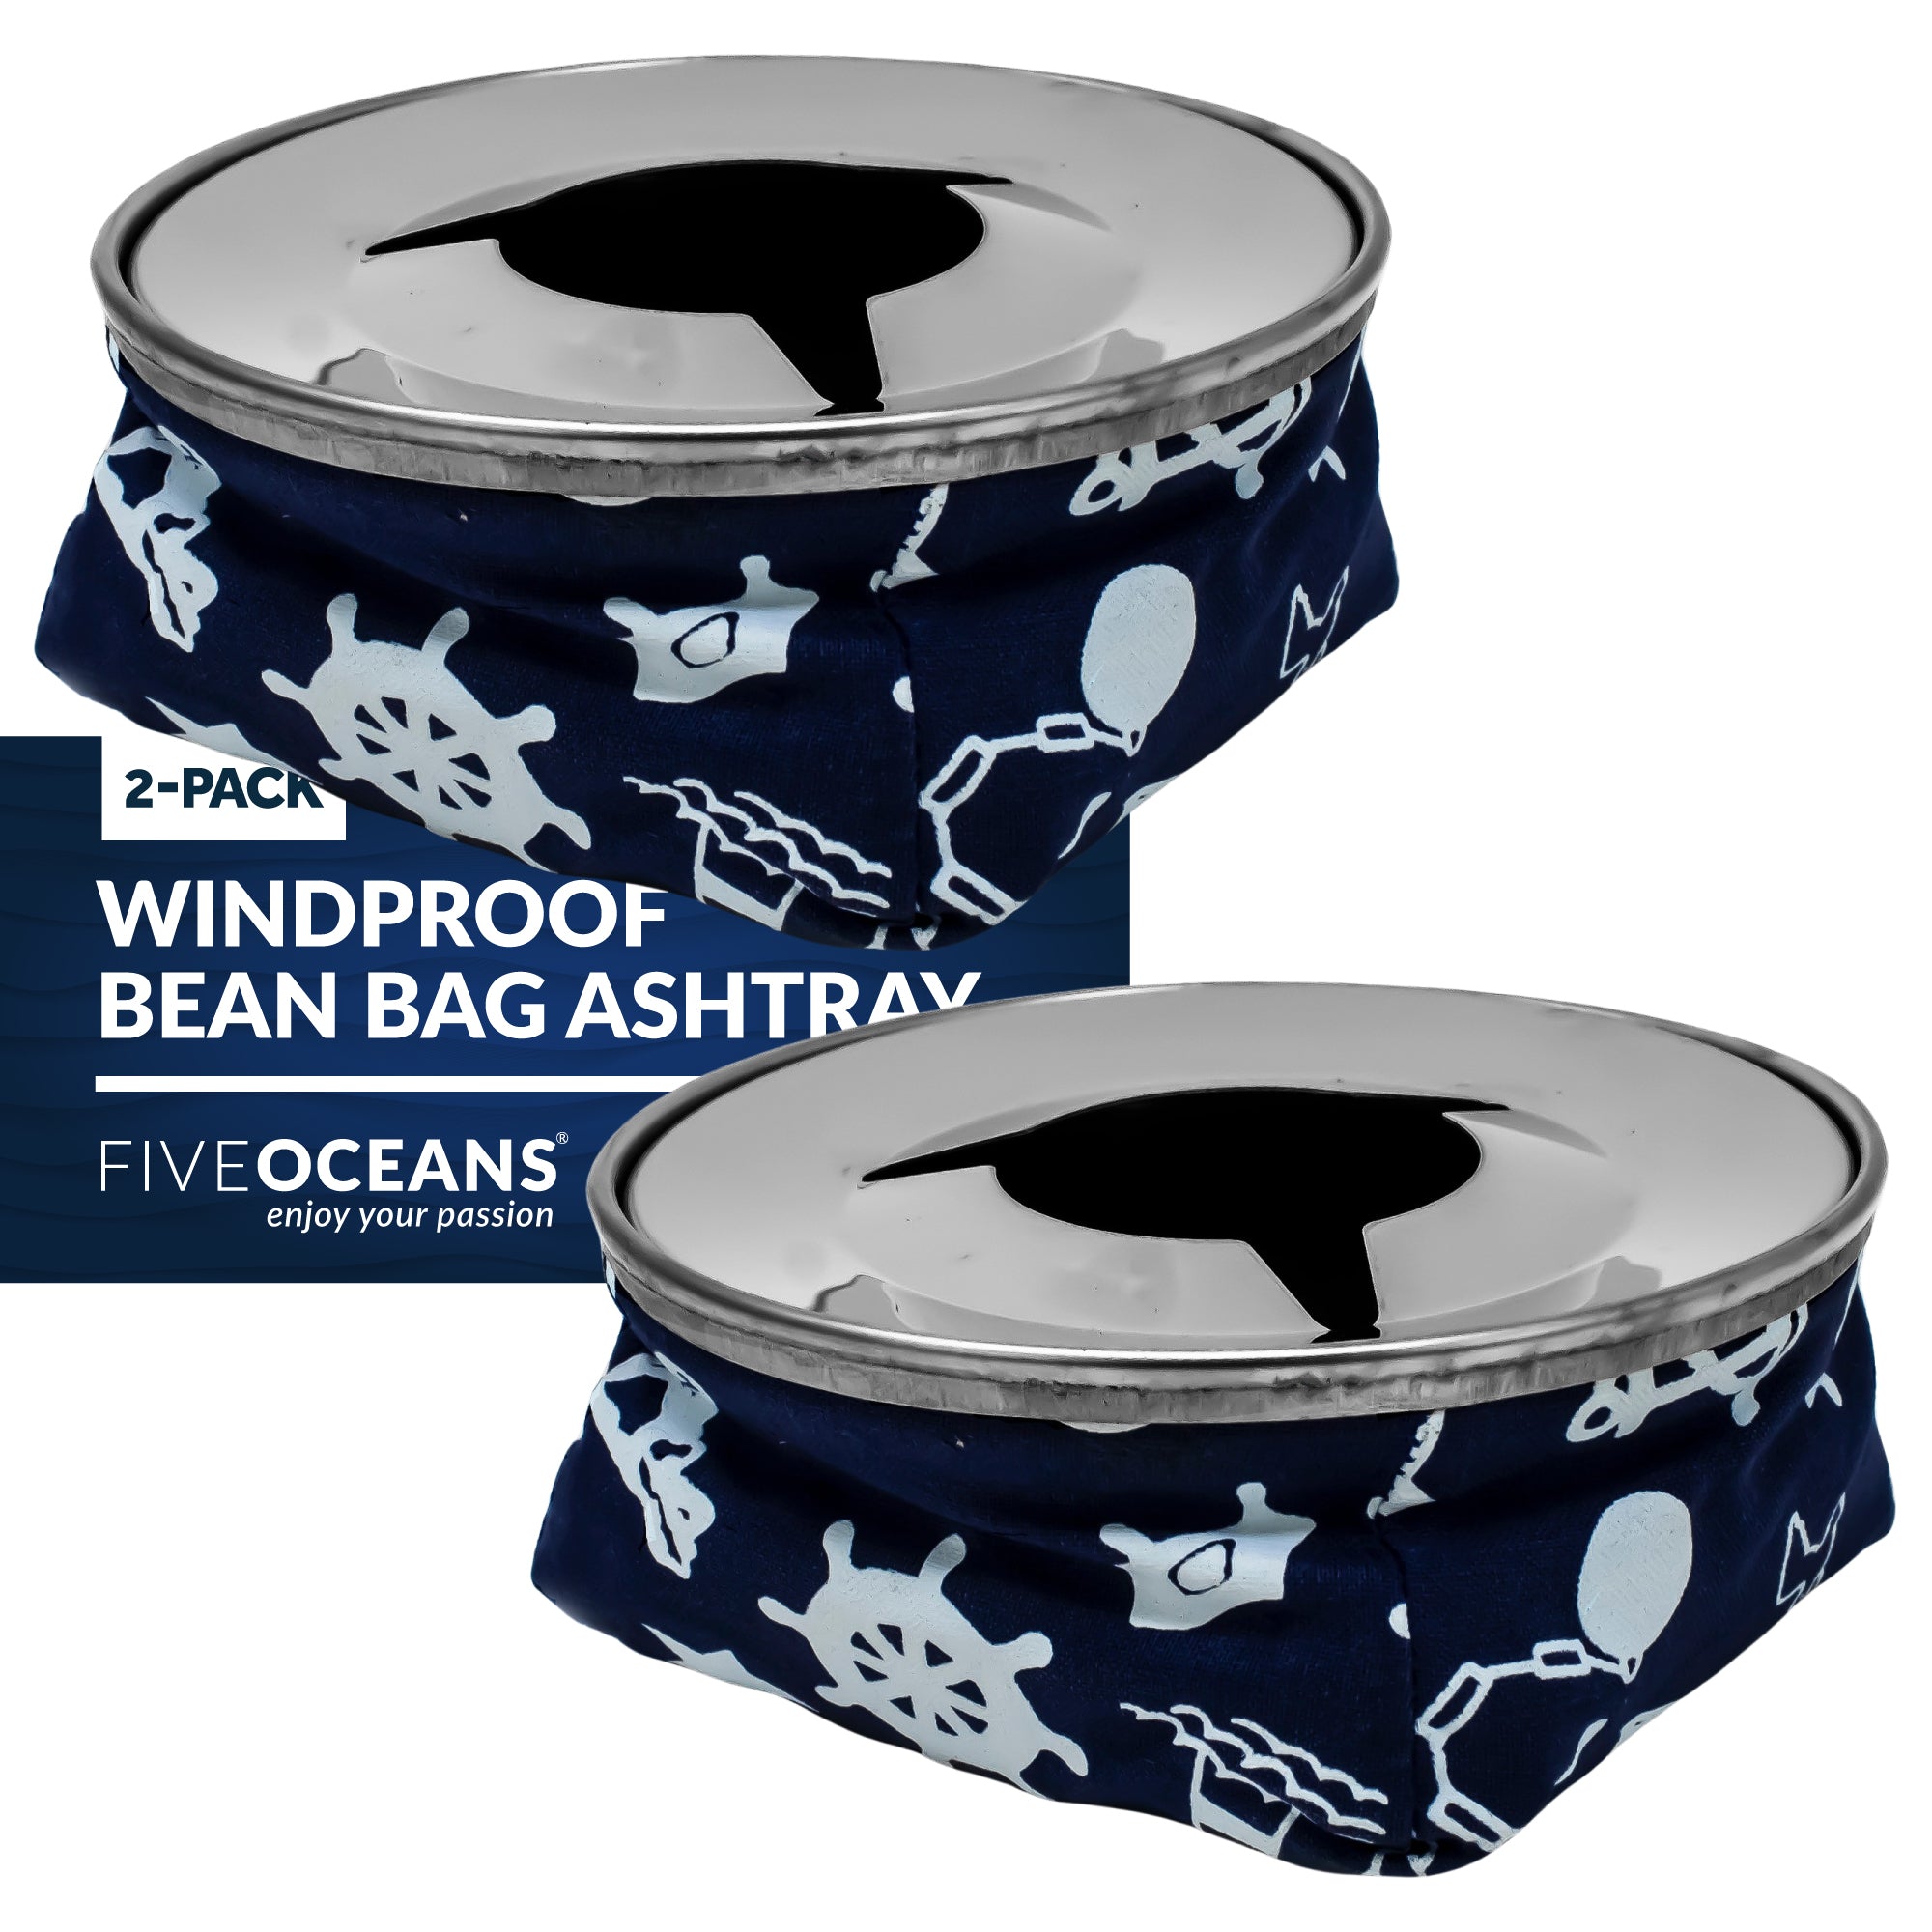 Windproof Bean Bag Ashtrays, Blue 2-Pack - FO101-M2